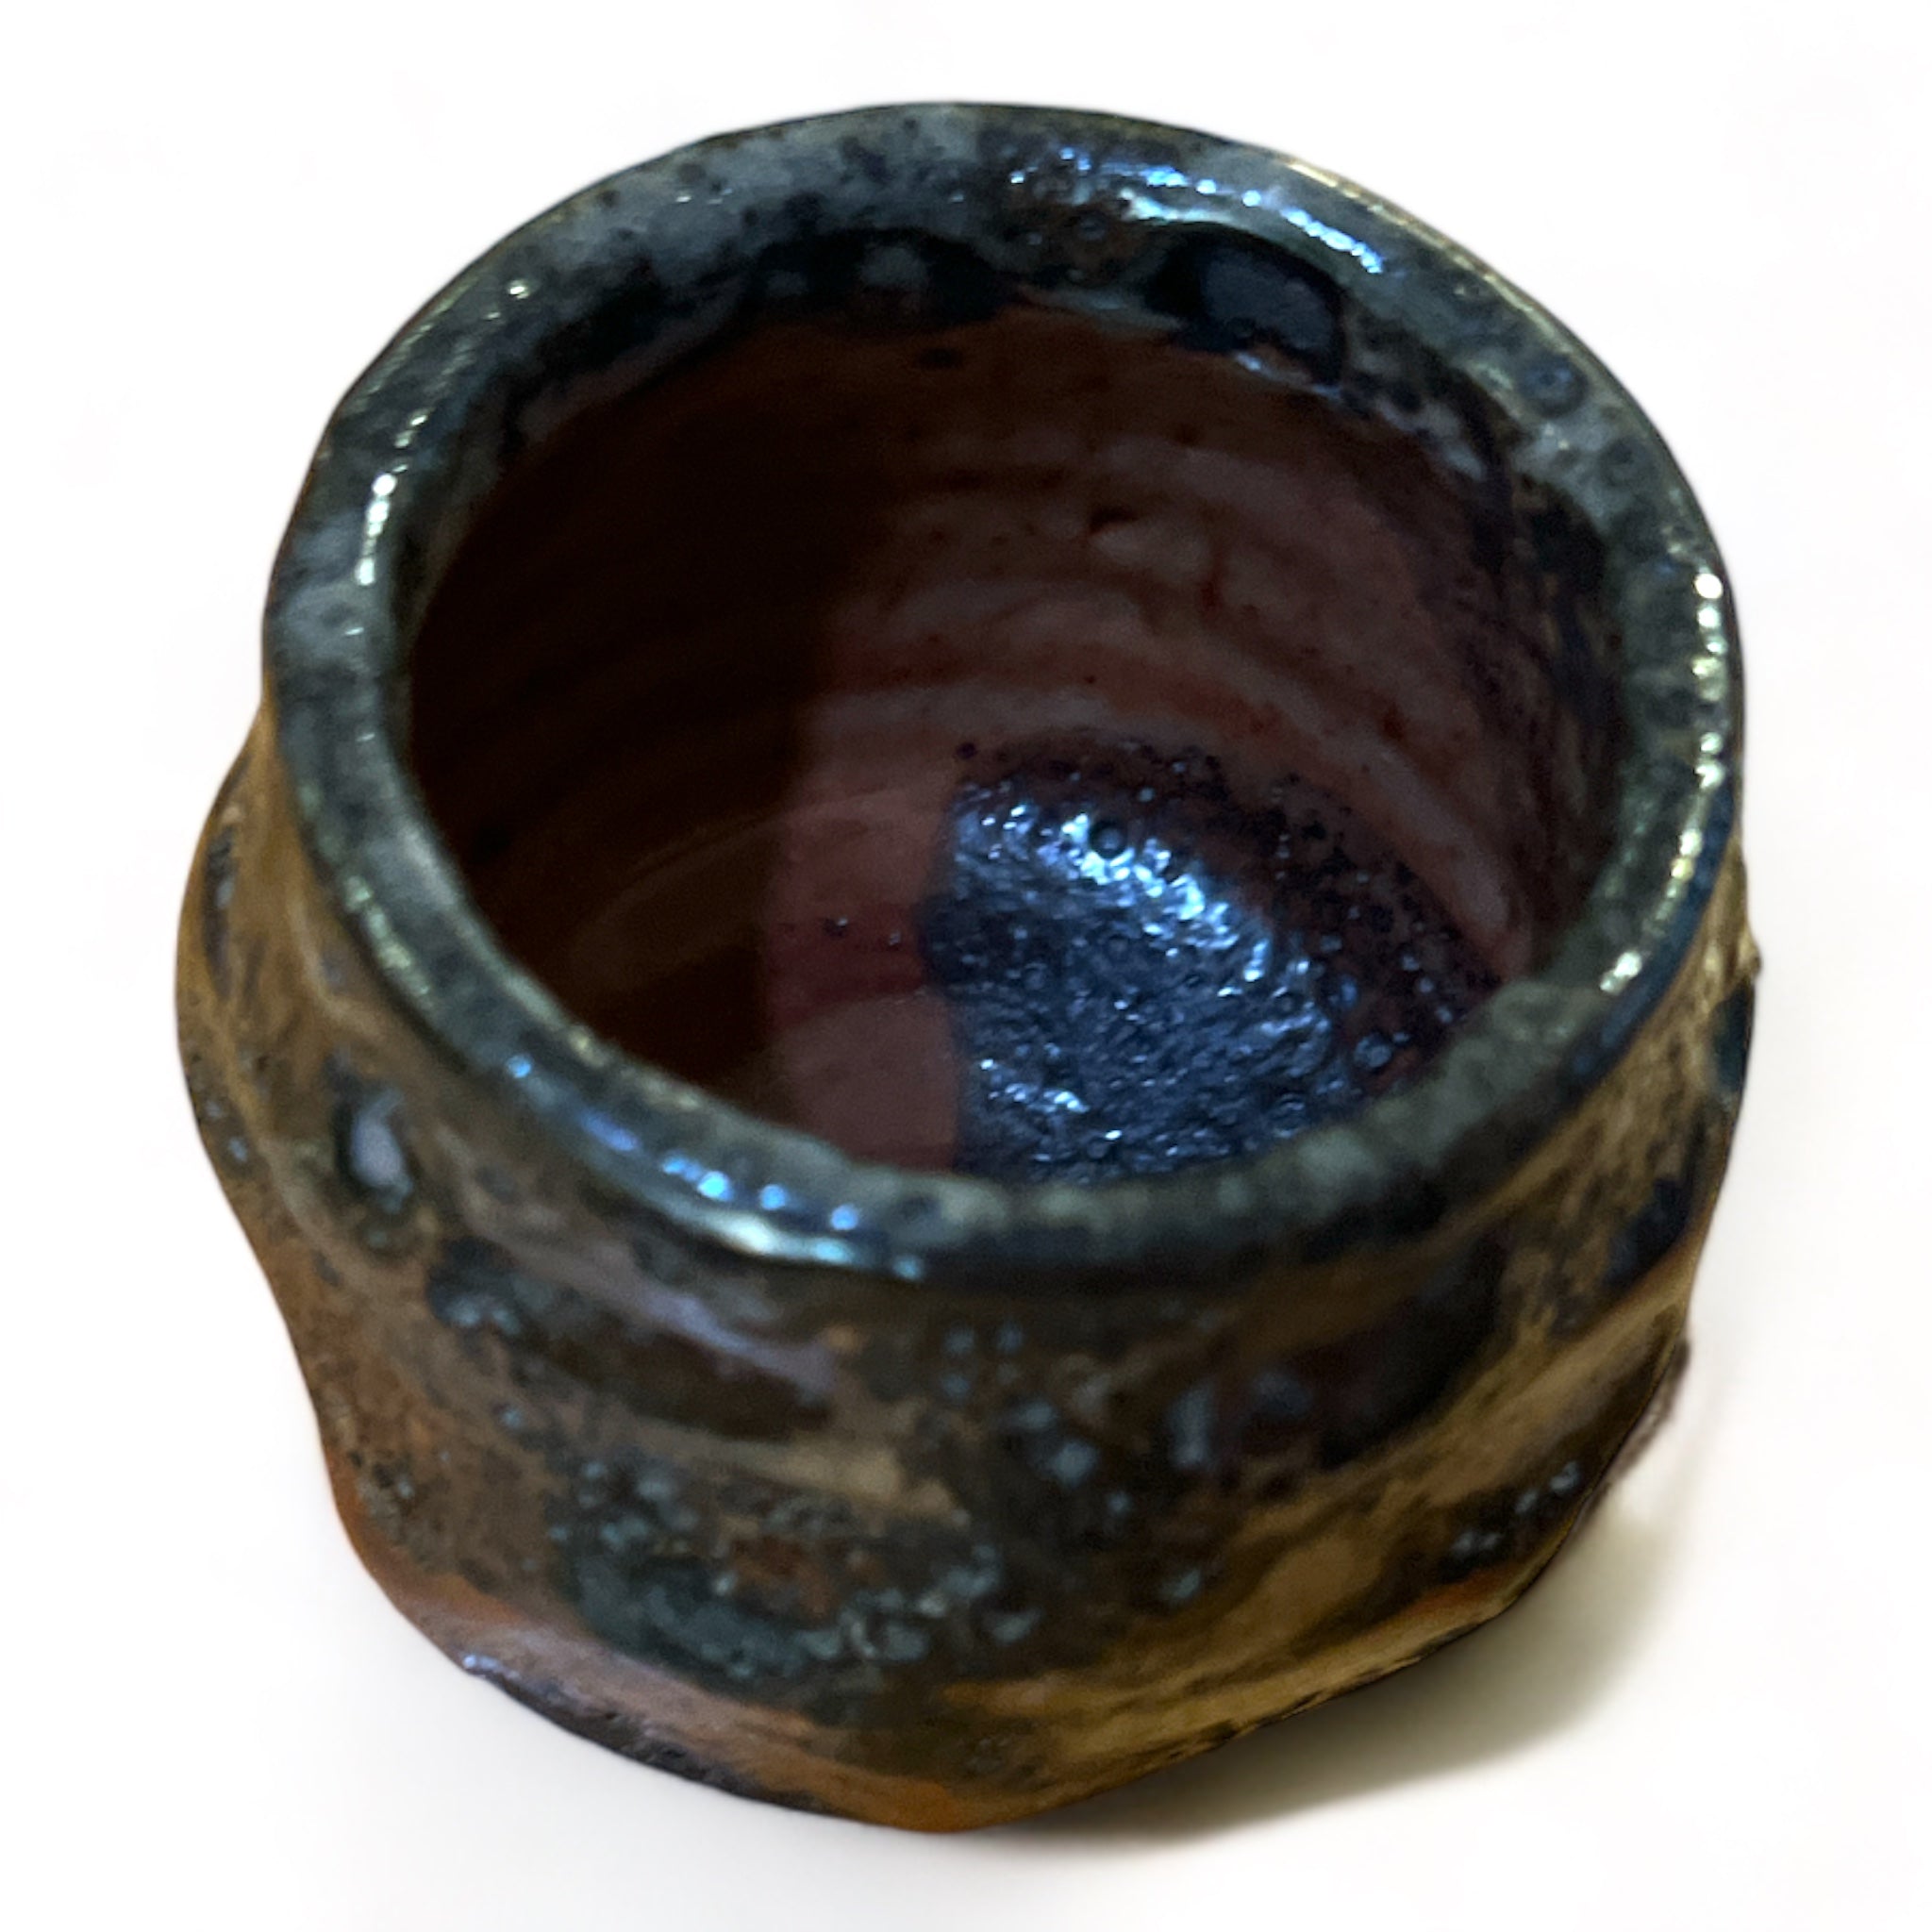 Taiwanese Handmade Wood-Fired Ceramic Teacup - Stellar Nebula